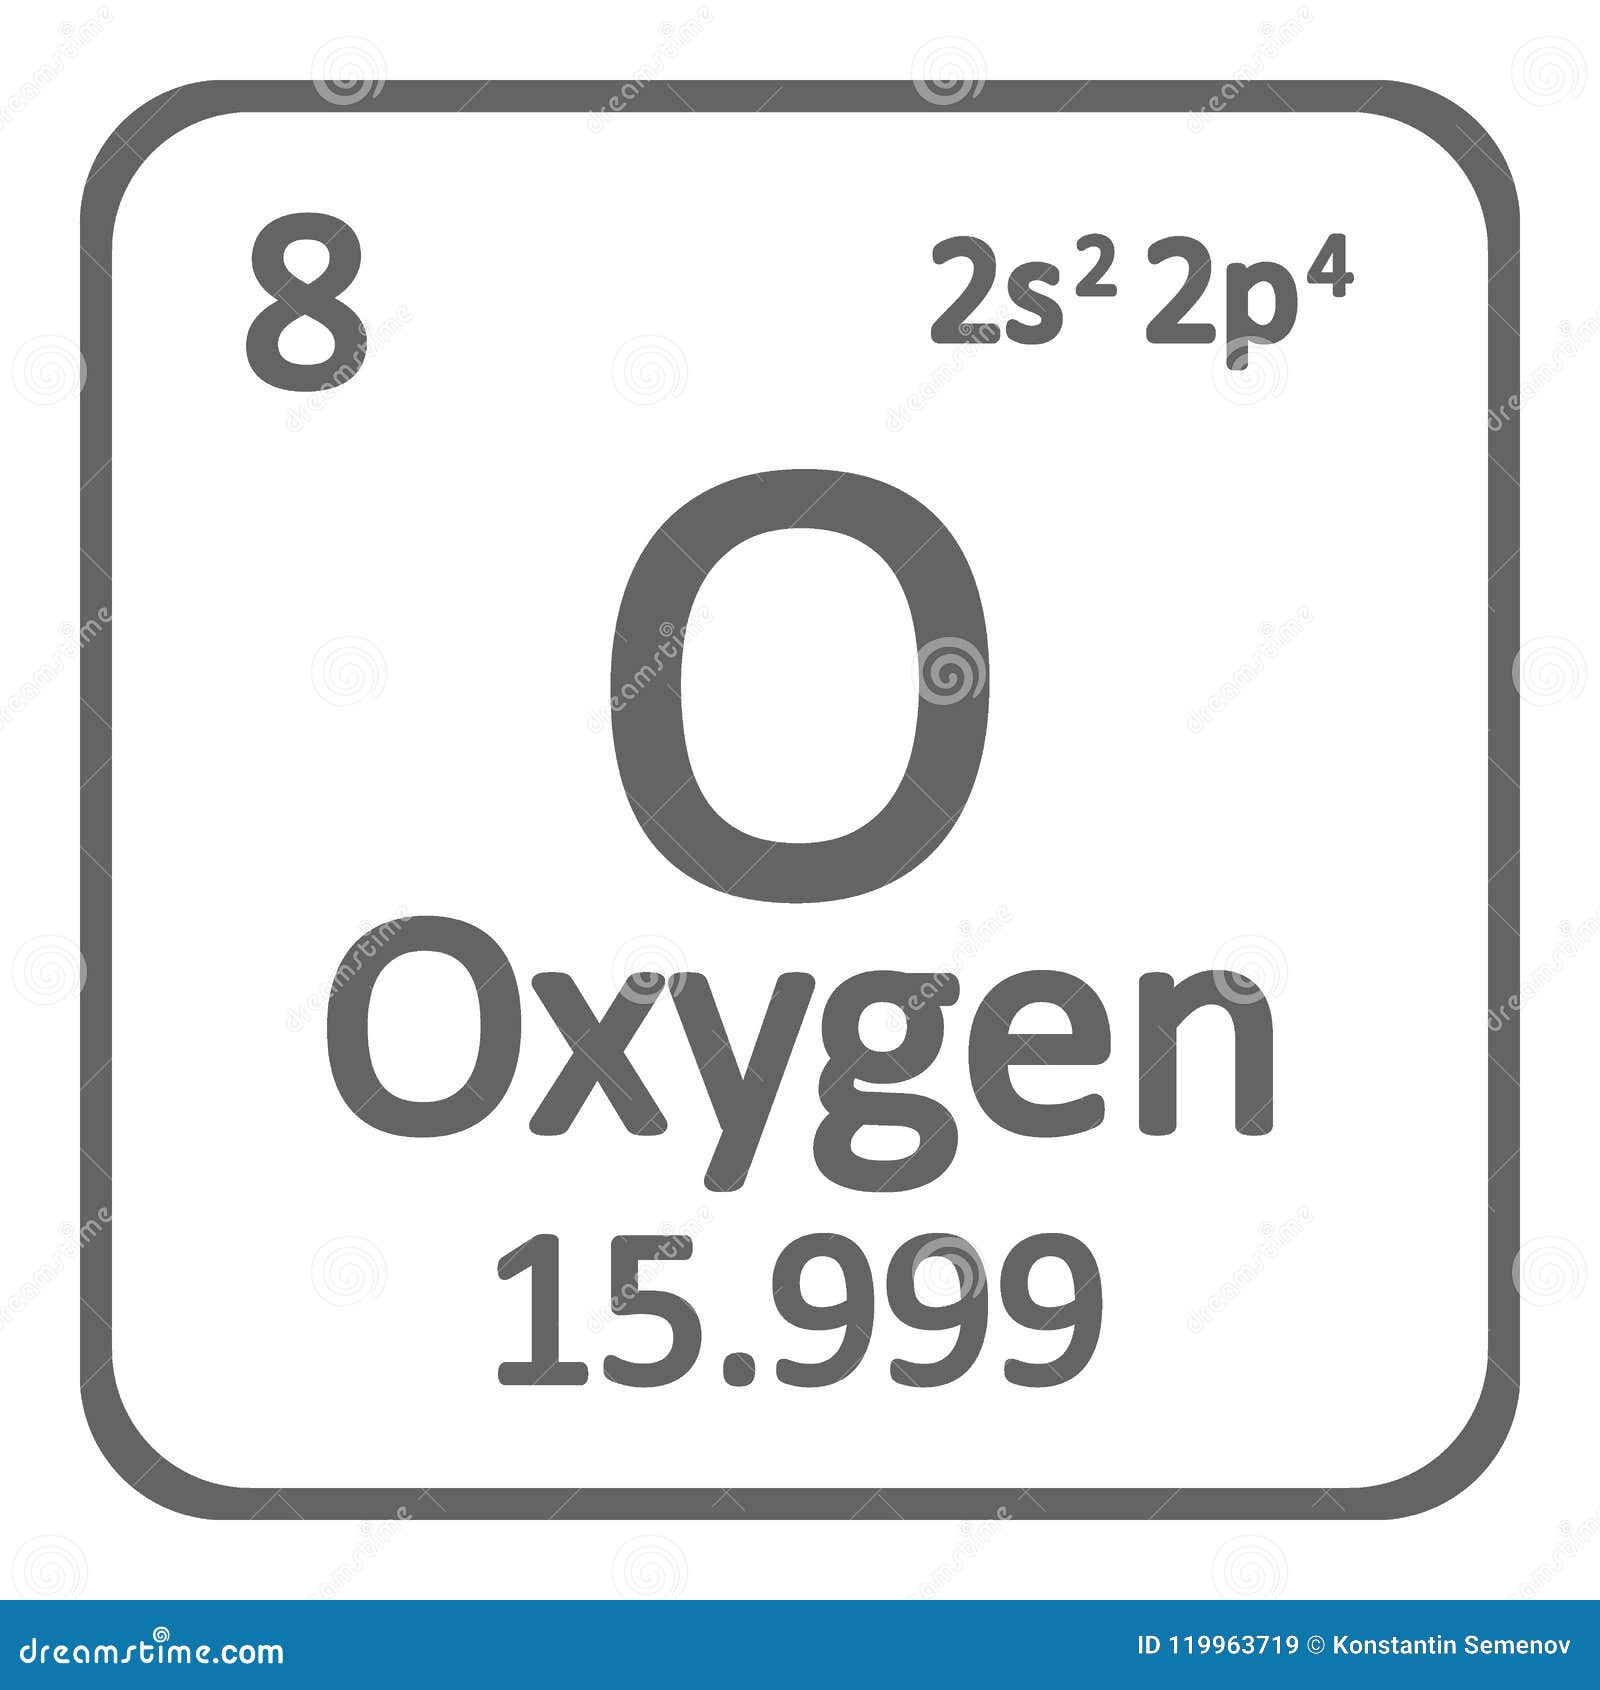 Символ элемента кислород. Карточка кислород. Кислород элемент таблицы Менделеева. Кислород из таблицы Менделеева. Oxygen таблица Менделеева.